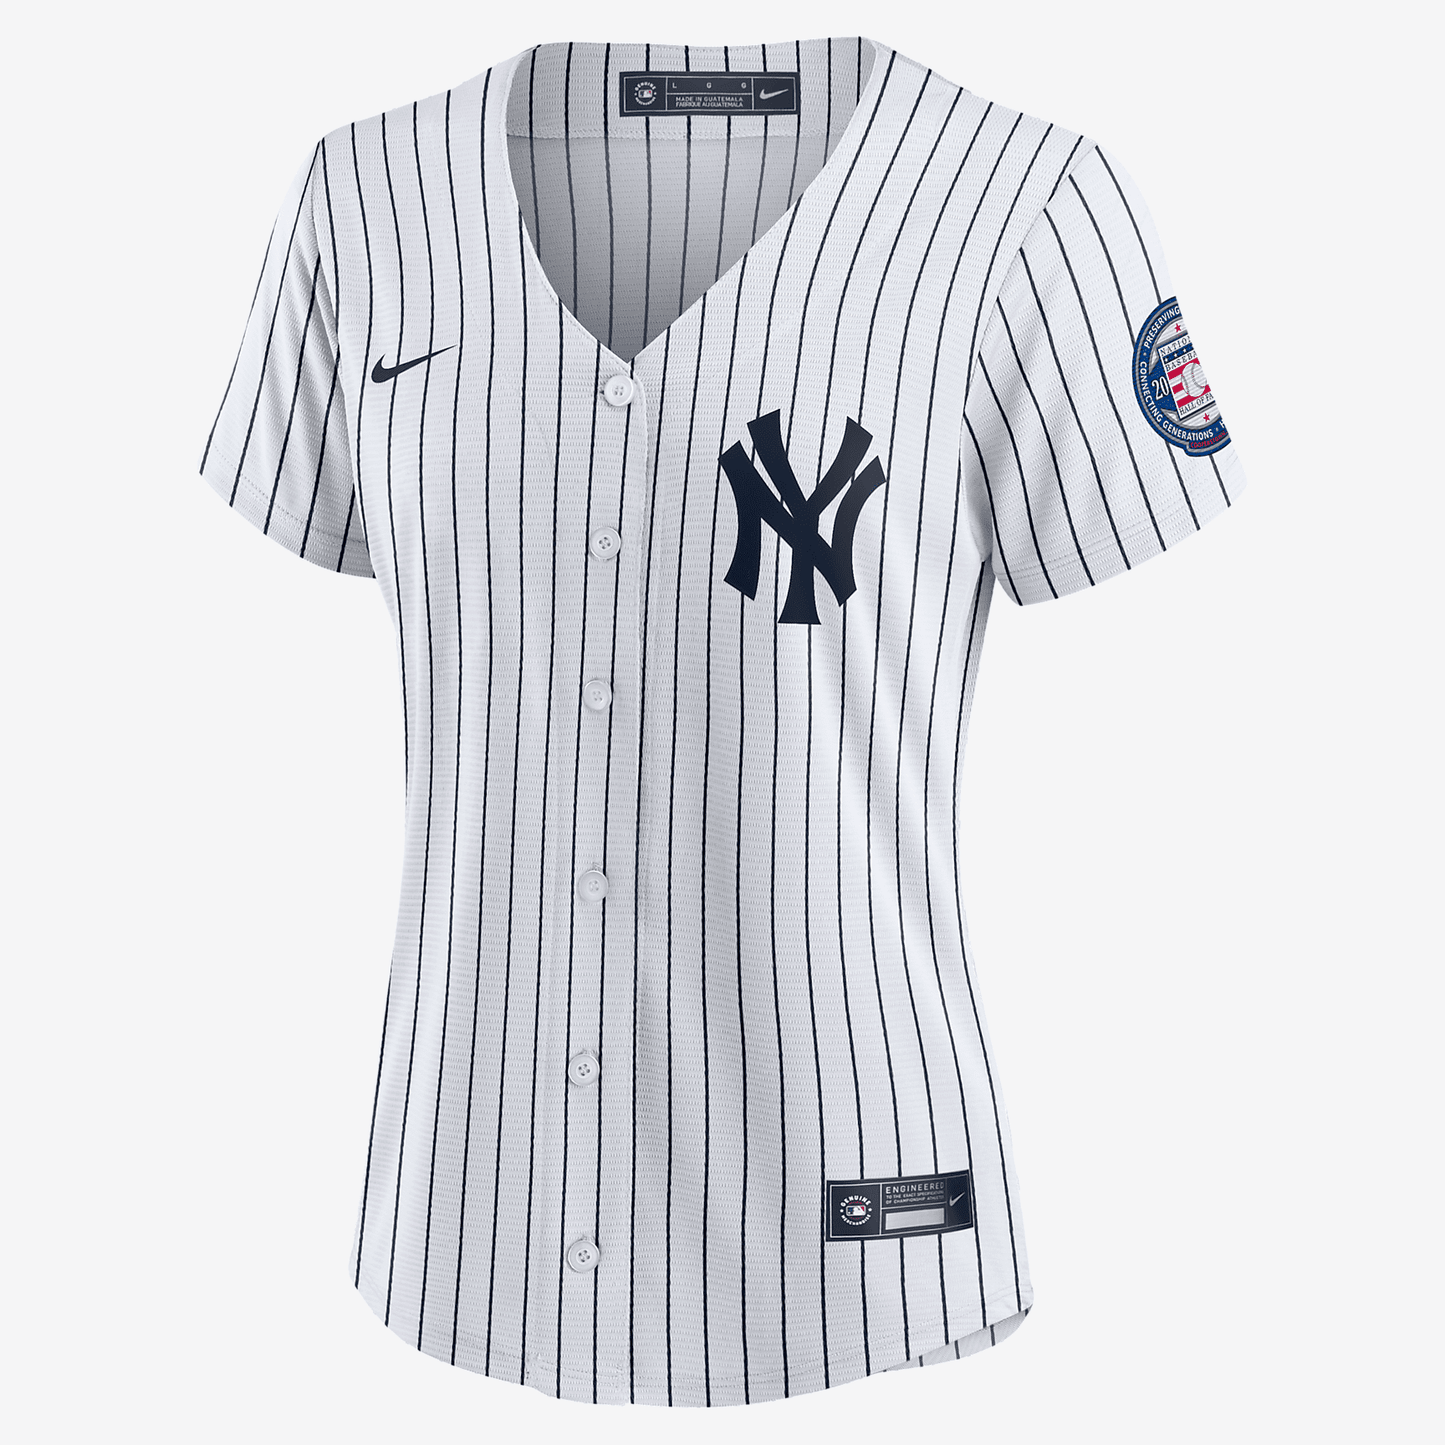 MLB New York Yankees 2020 Hall of Fame Induction (Derek Jeter) Women's Replica Baseball Jersey - White